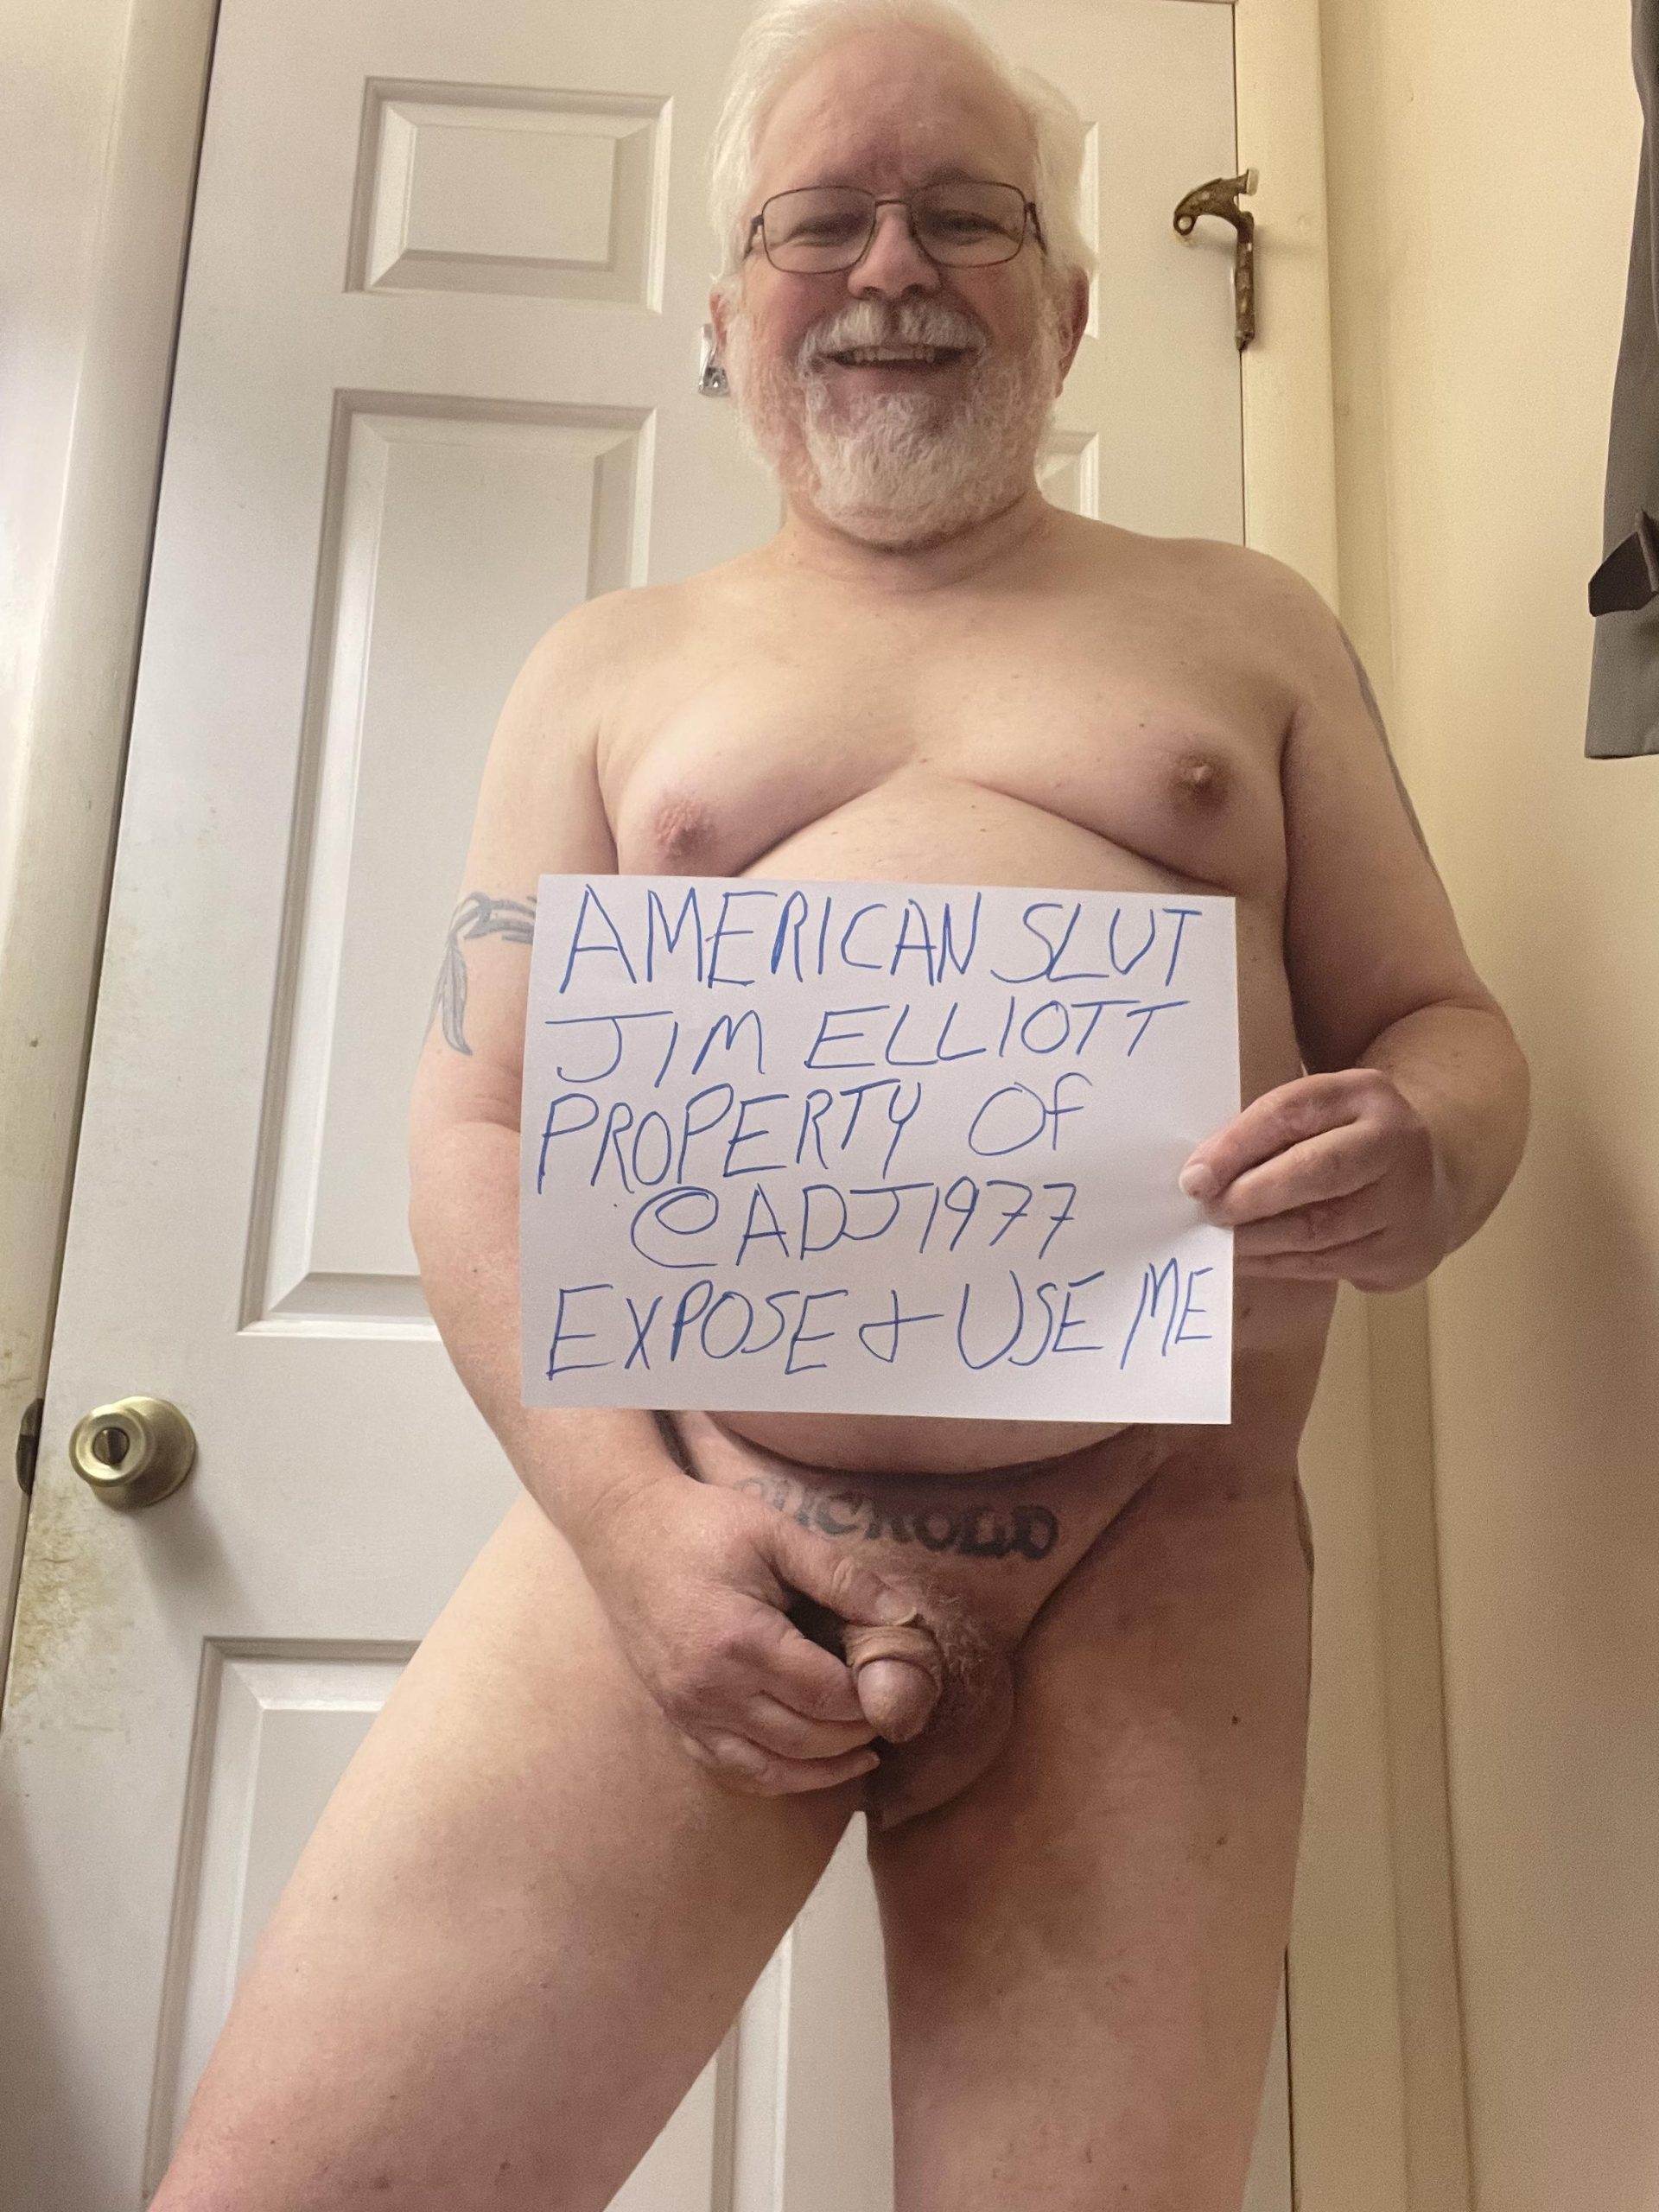 Tiny dick cuckold Jim Elliott exposed by @adj1977 on Telegram